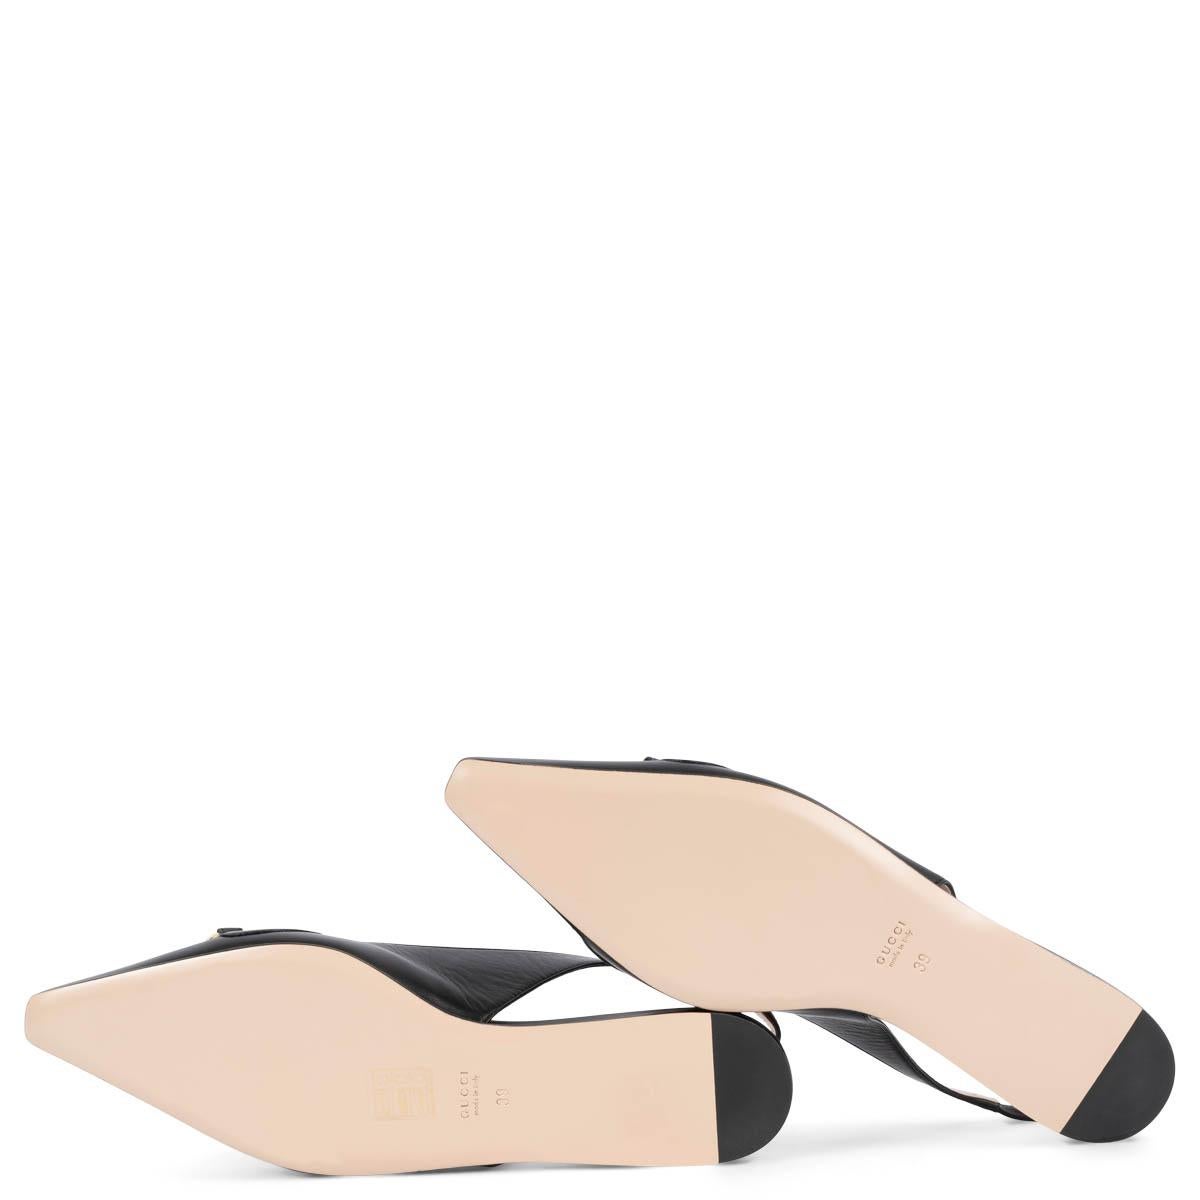 GUCCI cuir noir ZUMI POINTED TOE SLINGBACK Ballet Flats Shoes 39 3